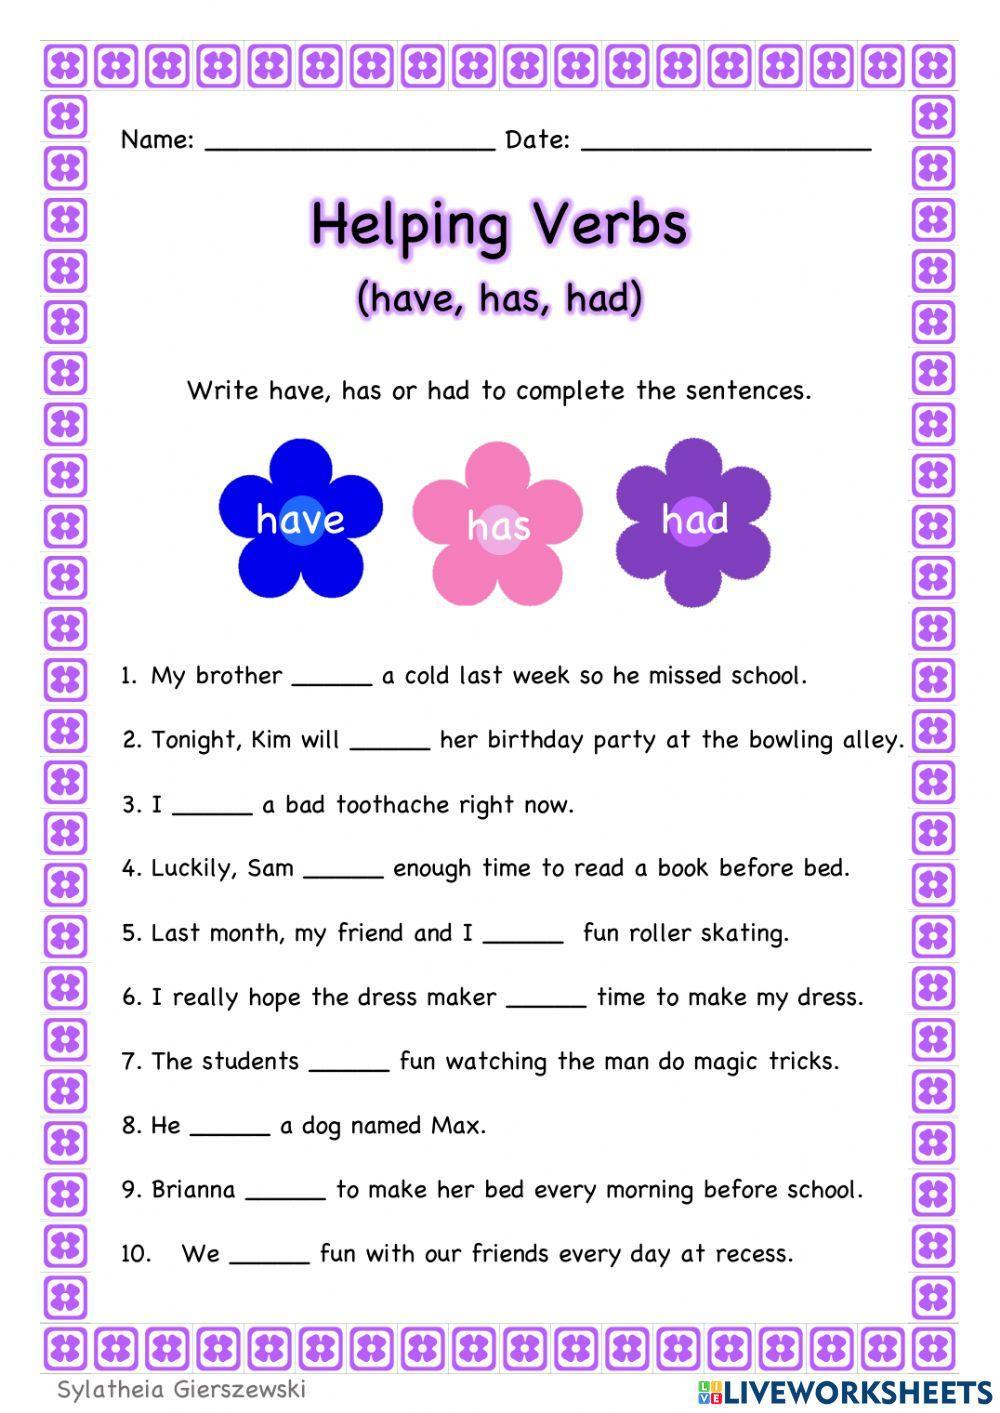 Helping Verbs (have, has, had)